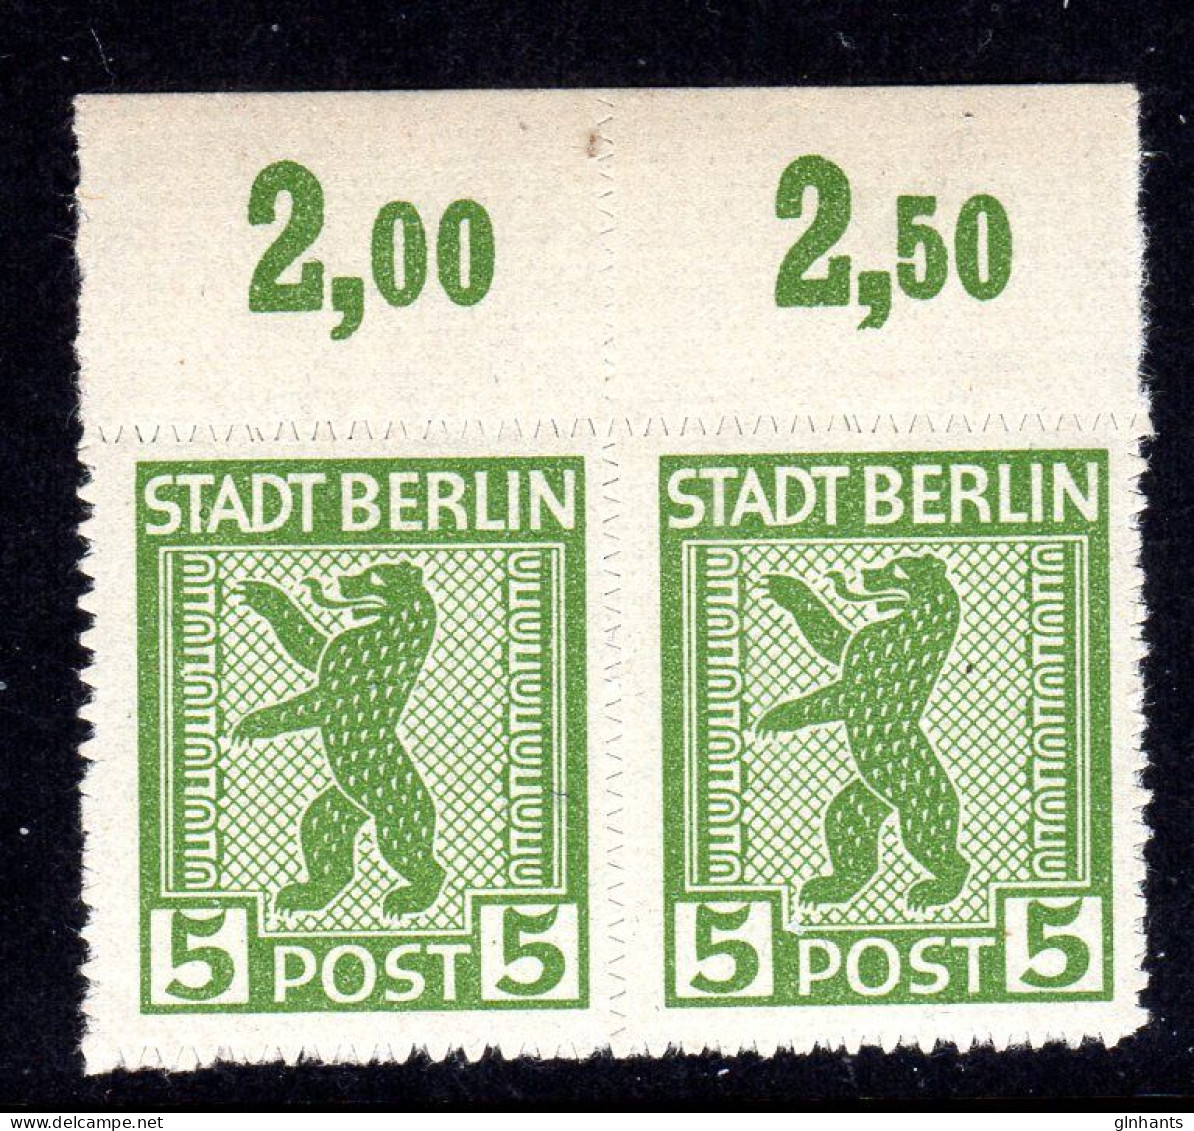 GERMANY BERLIN-BRANDENBURG - 1945 5PF BEAR STAMP IN PAIR ZIGZAG ROULETTE FINE MNH ** - Berlino & Brandenburgo